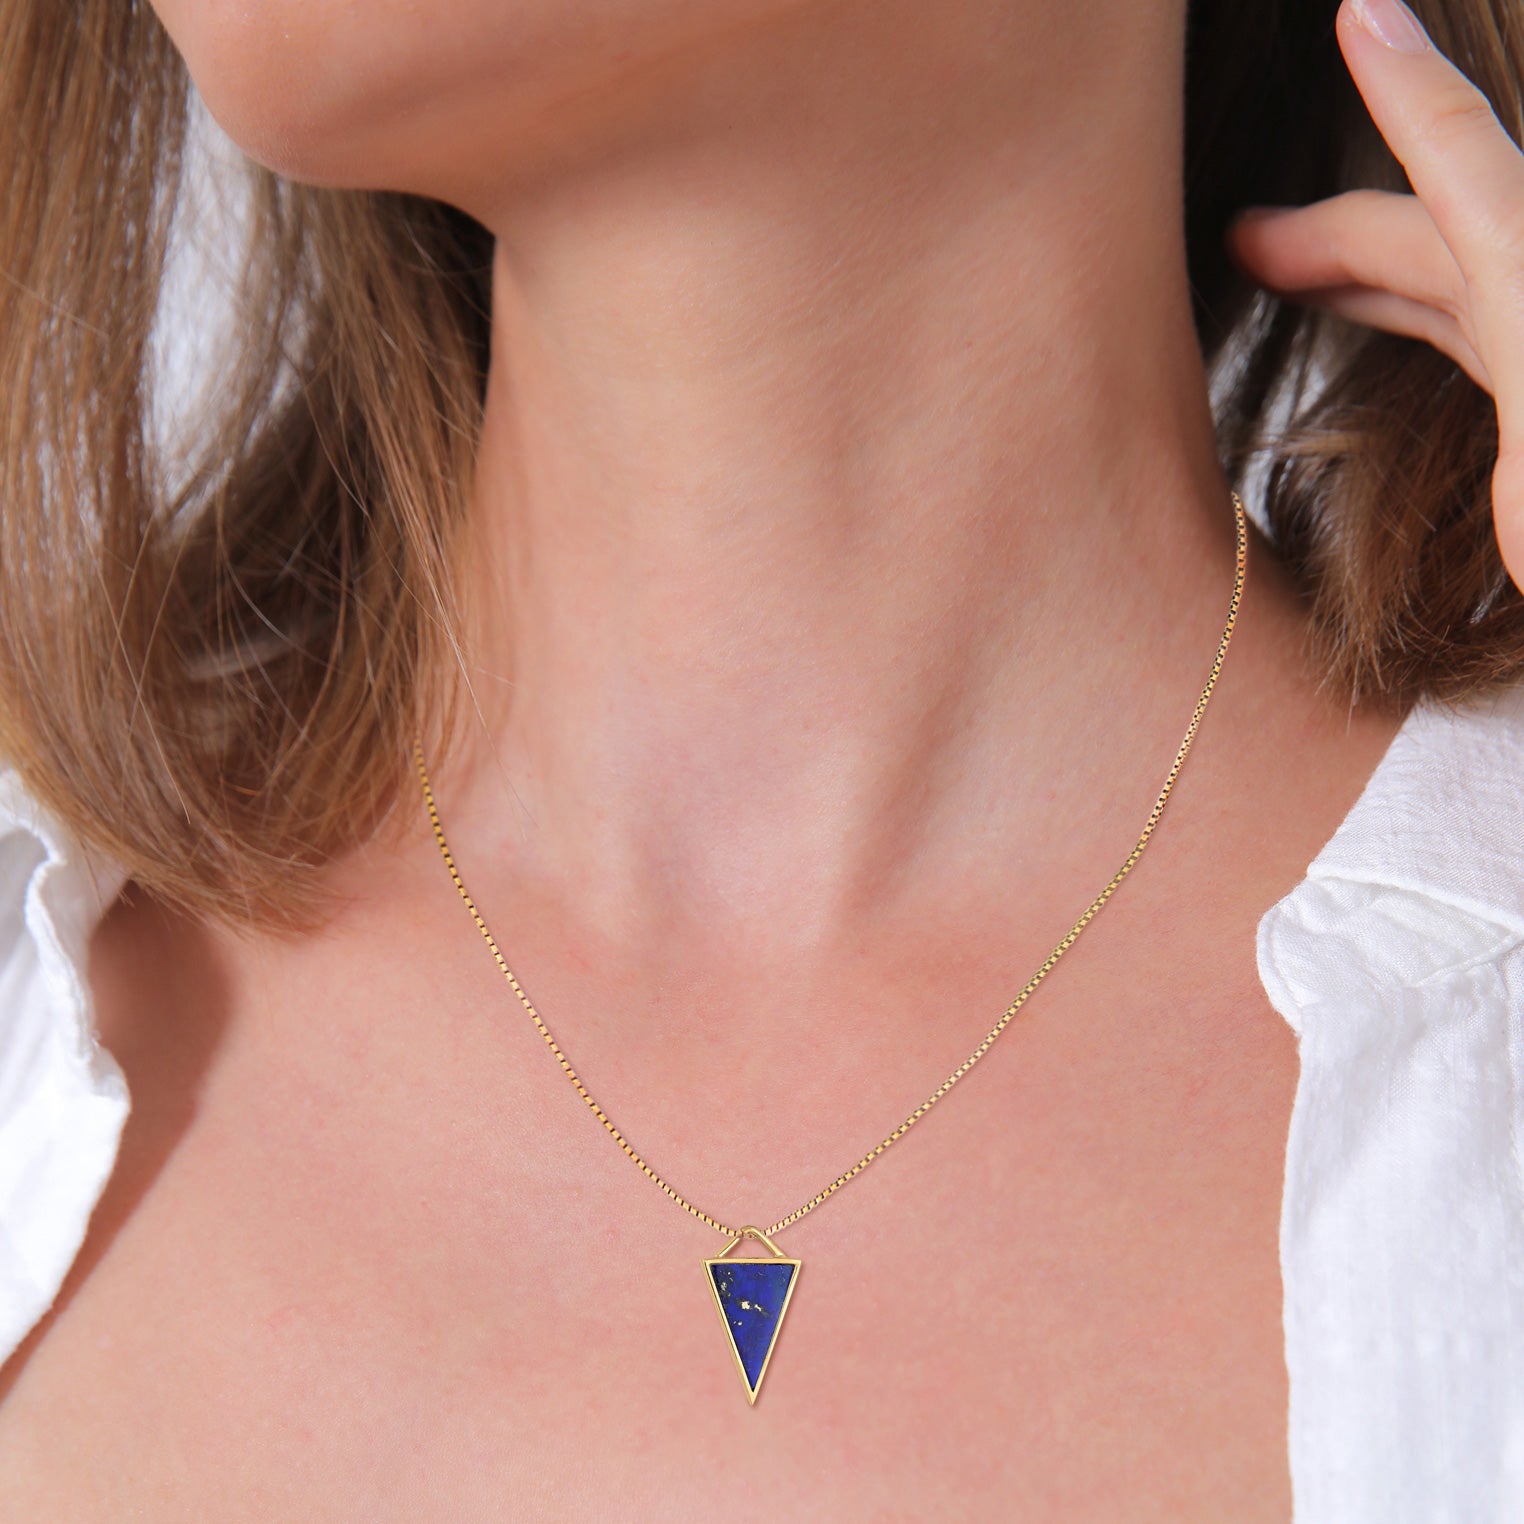 Gold - Elli PREMIUM | Venezianer-Halskette Dreieck | Lapis Lazuli ( Blau ) | 925 Sterling Silber vergoldet